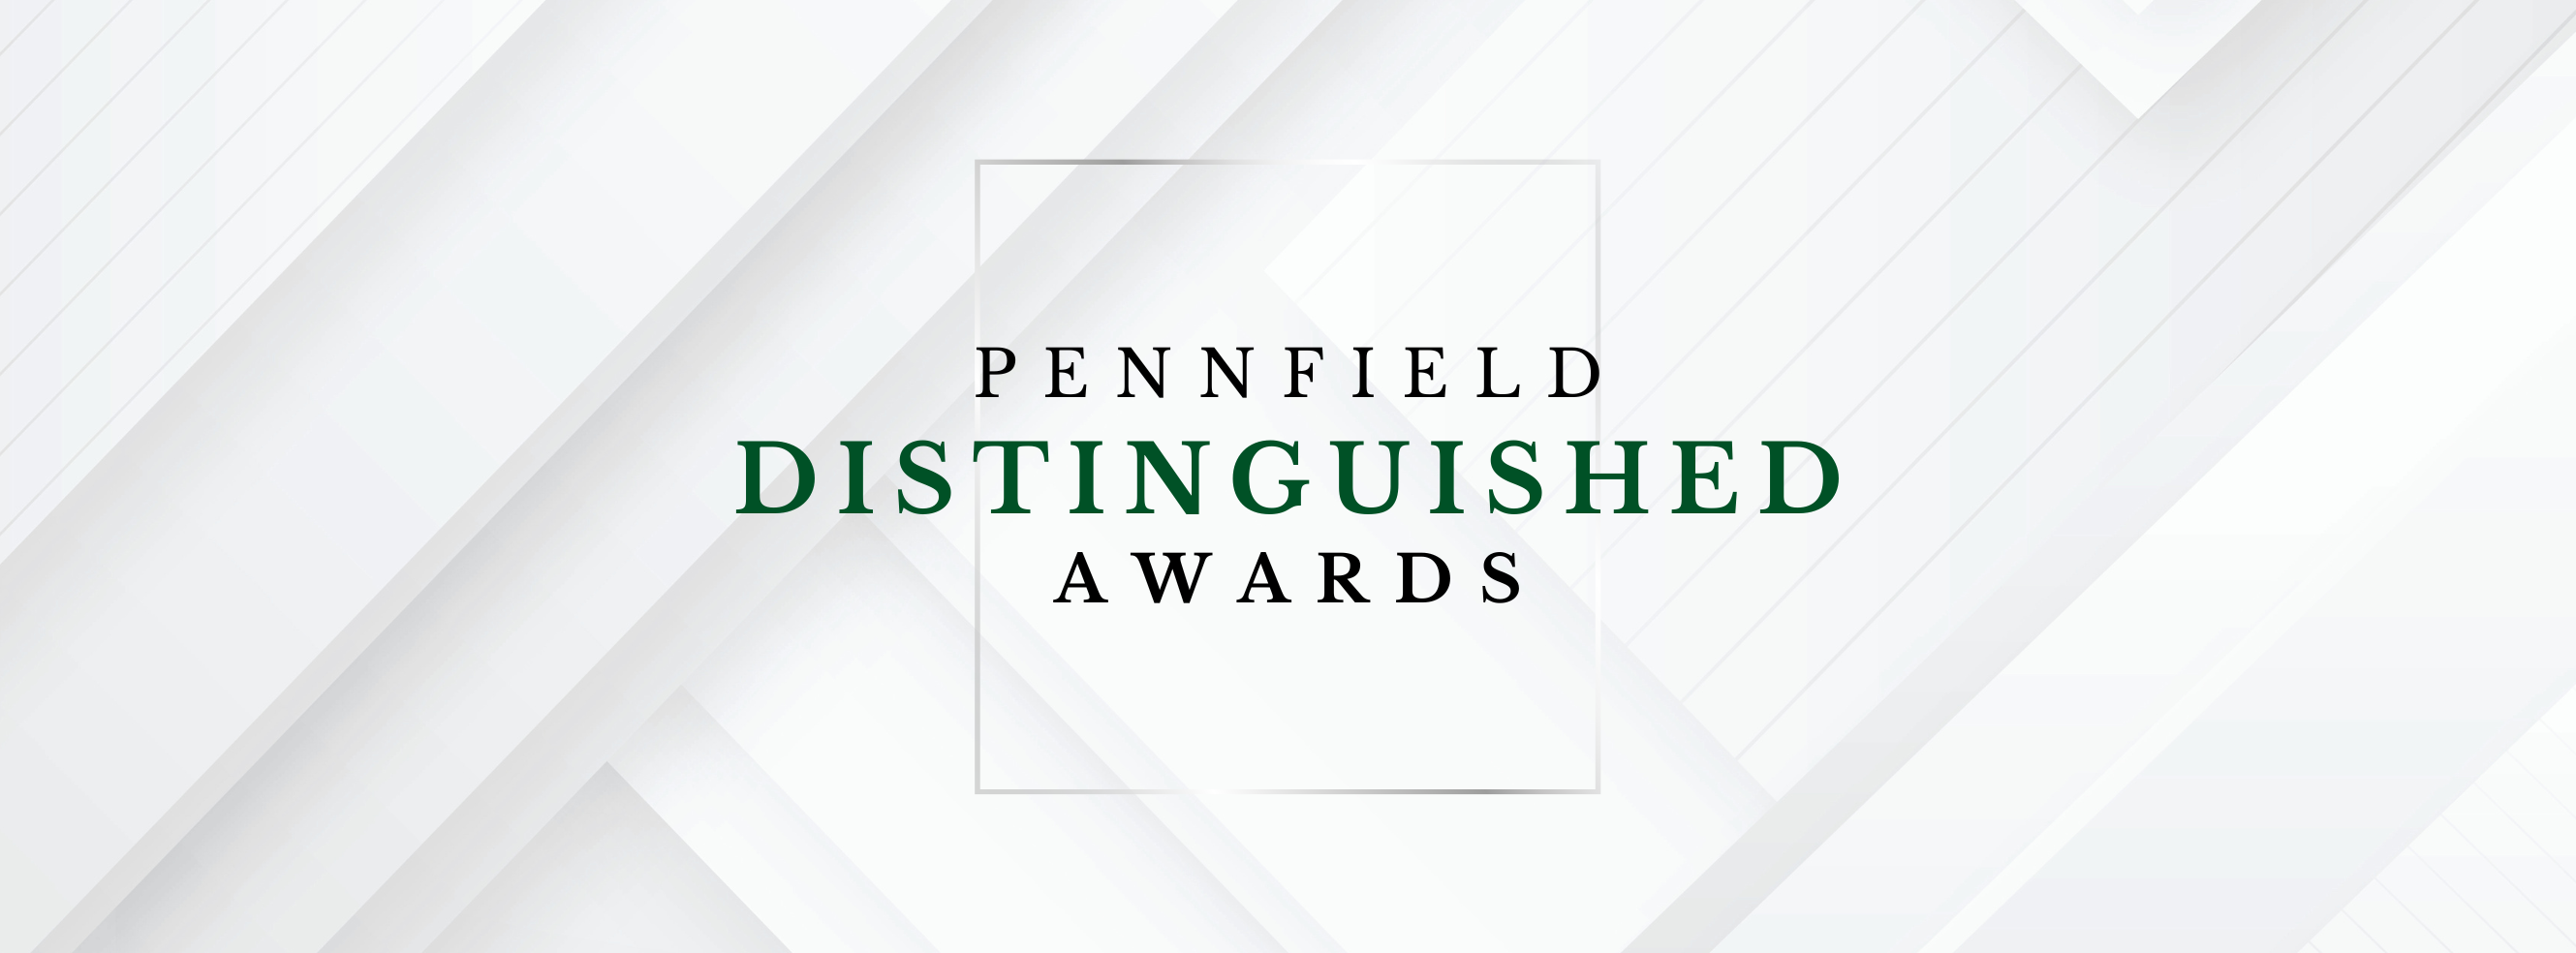 Pennfield Distinguished Awards